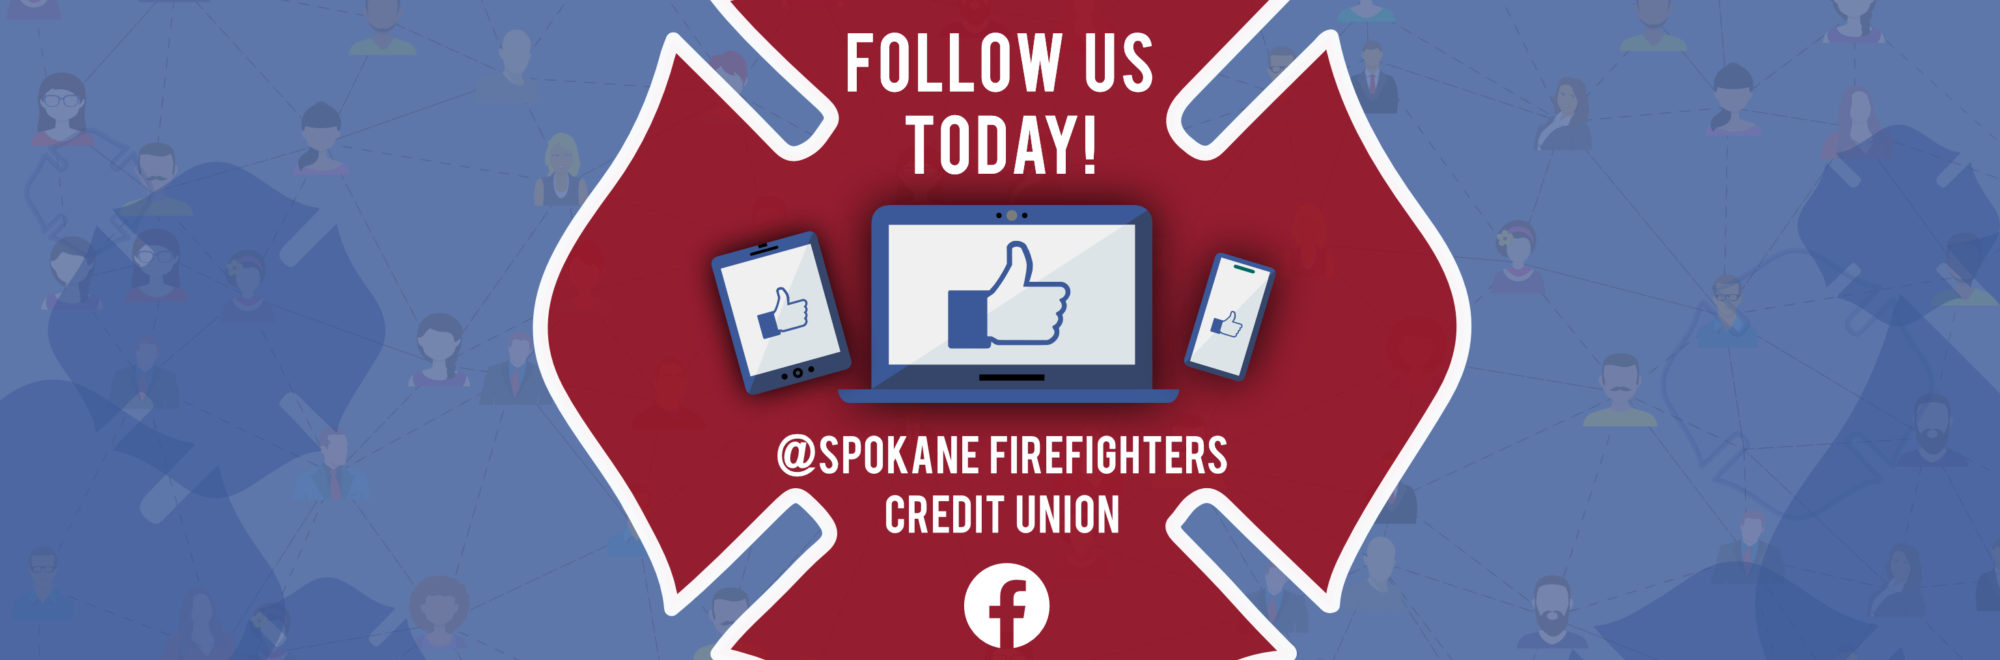 Follow us today on Facebook @Spokane Firefighters Credit Union